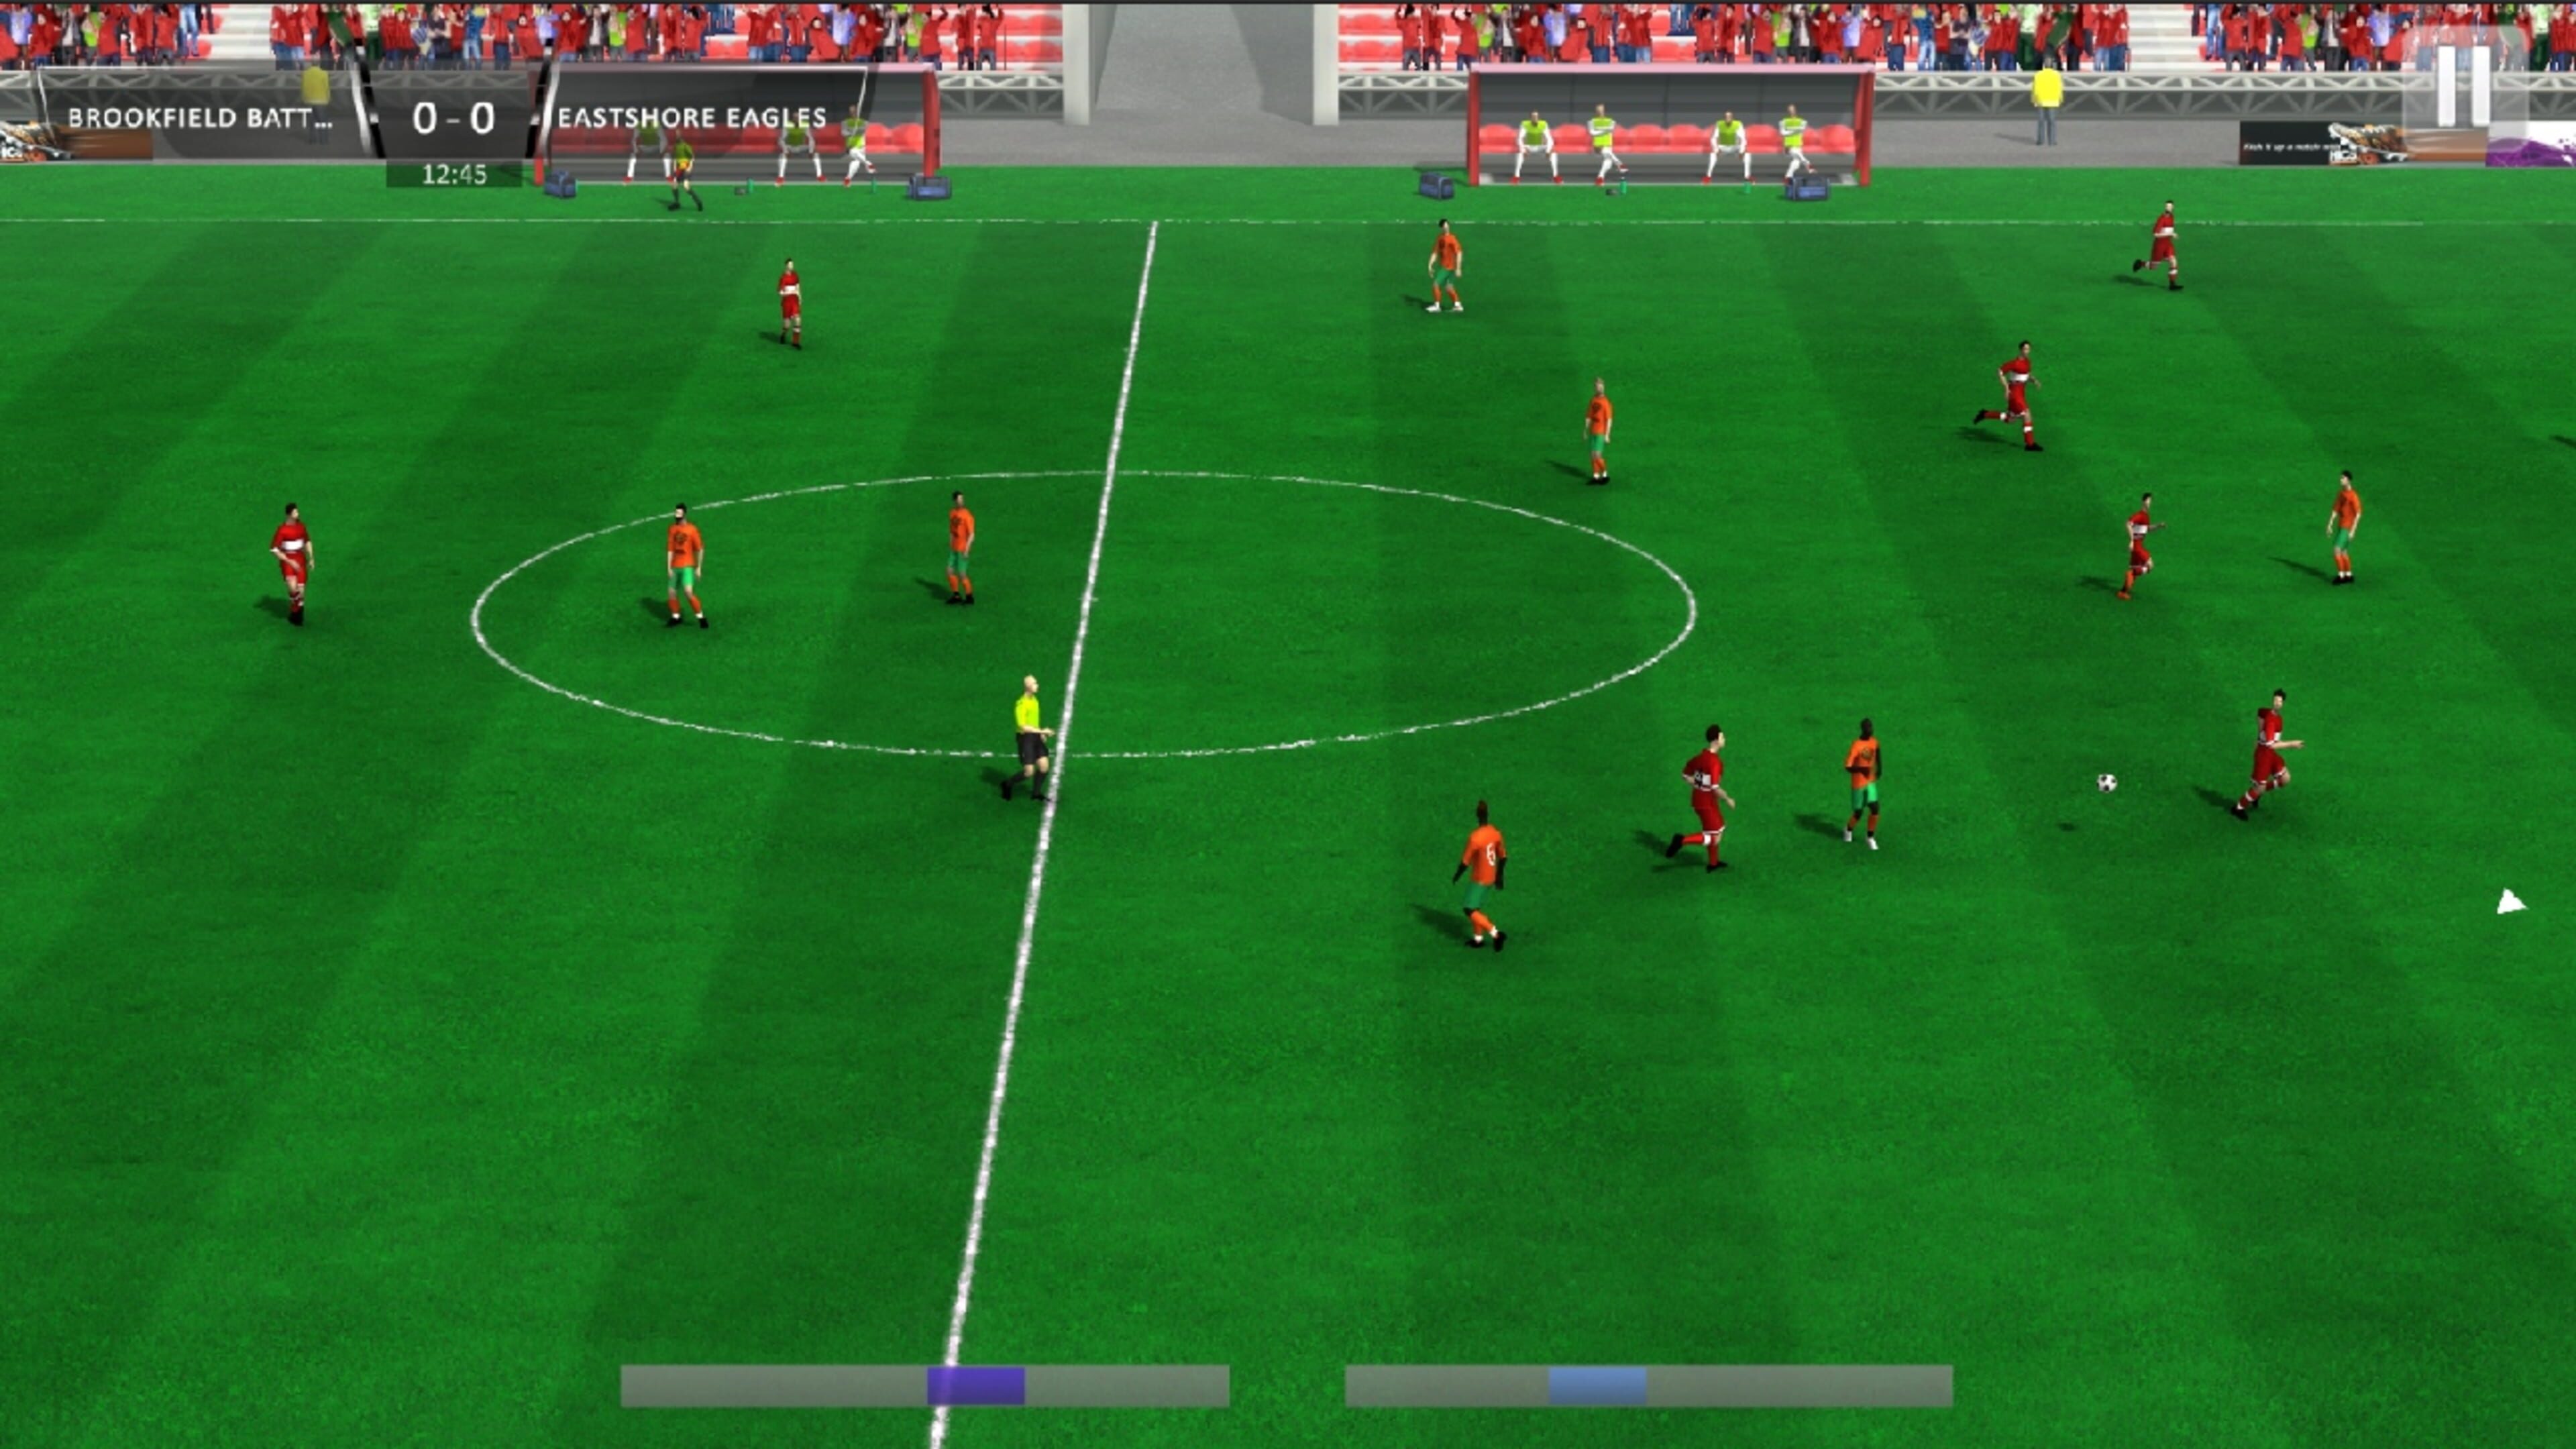 Football Simulator 2024 Stash Games tracker